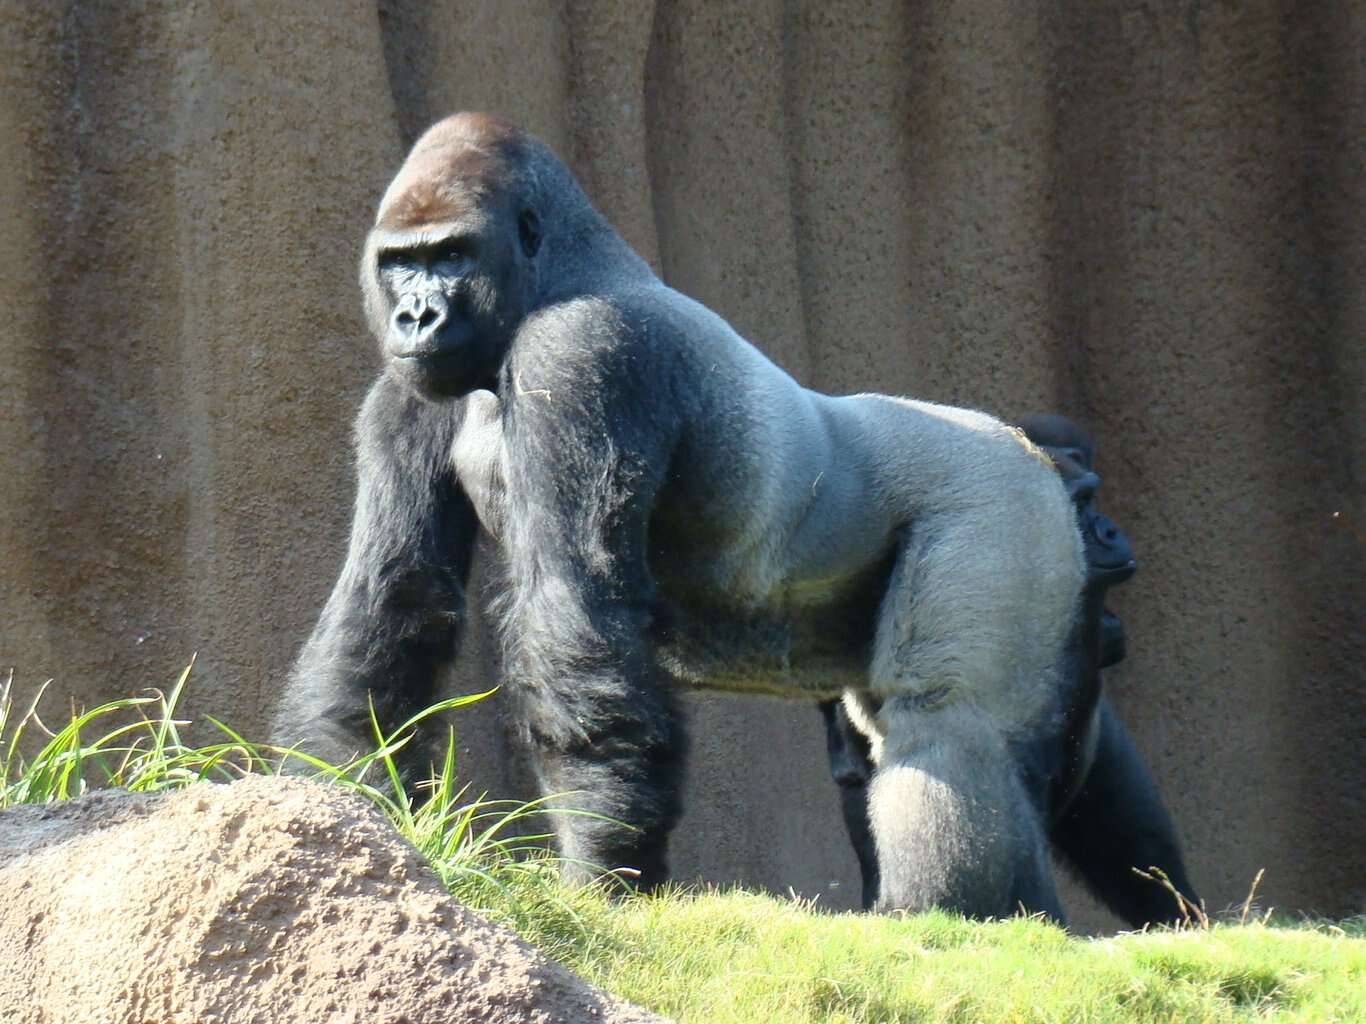 Image of Gorillas